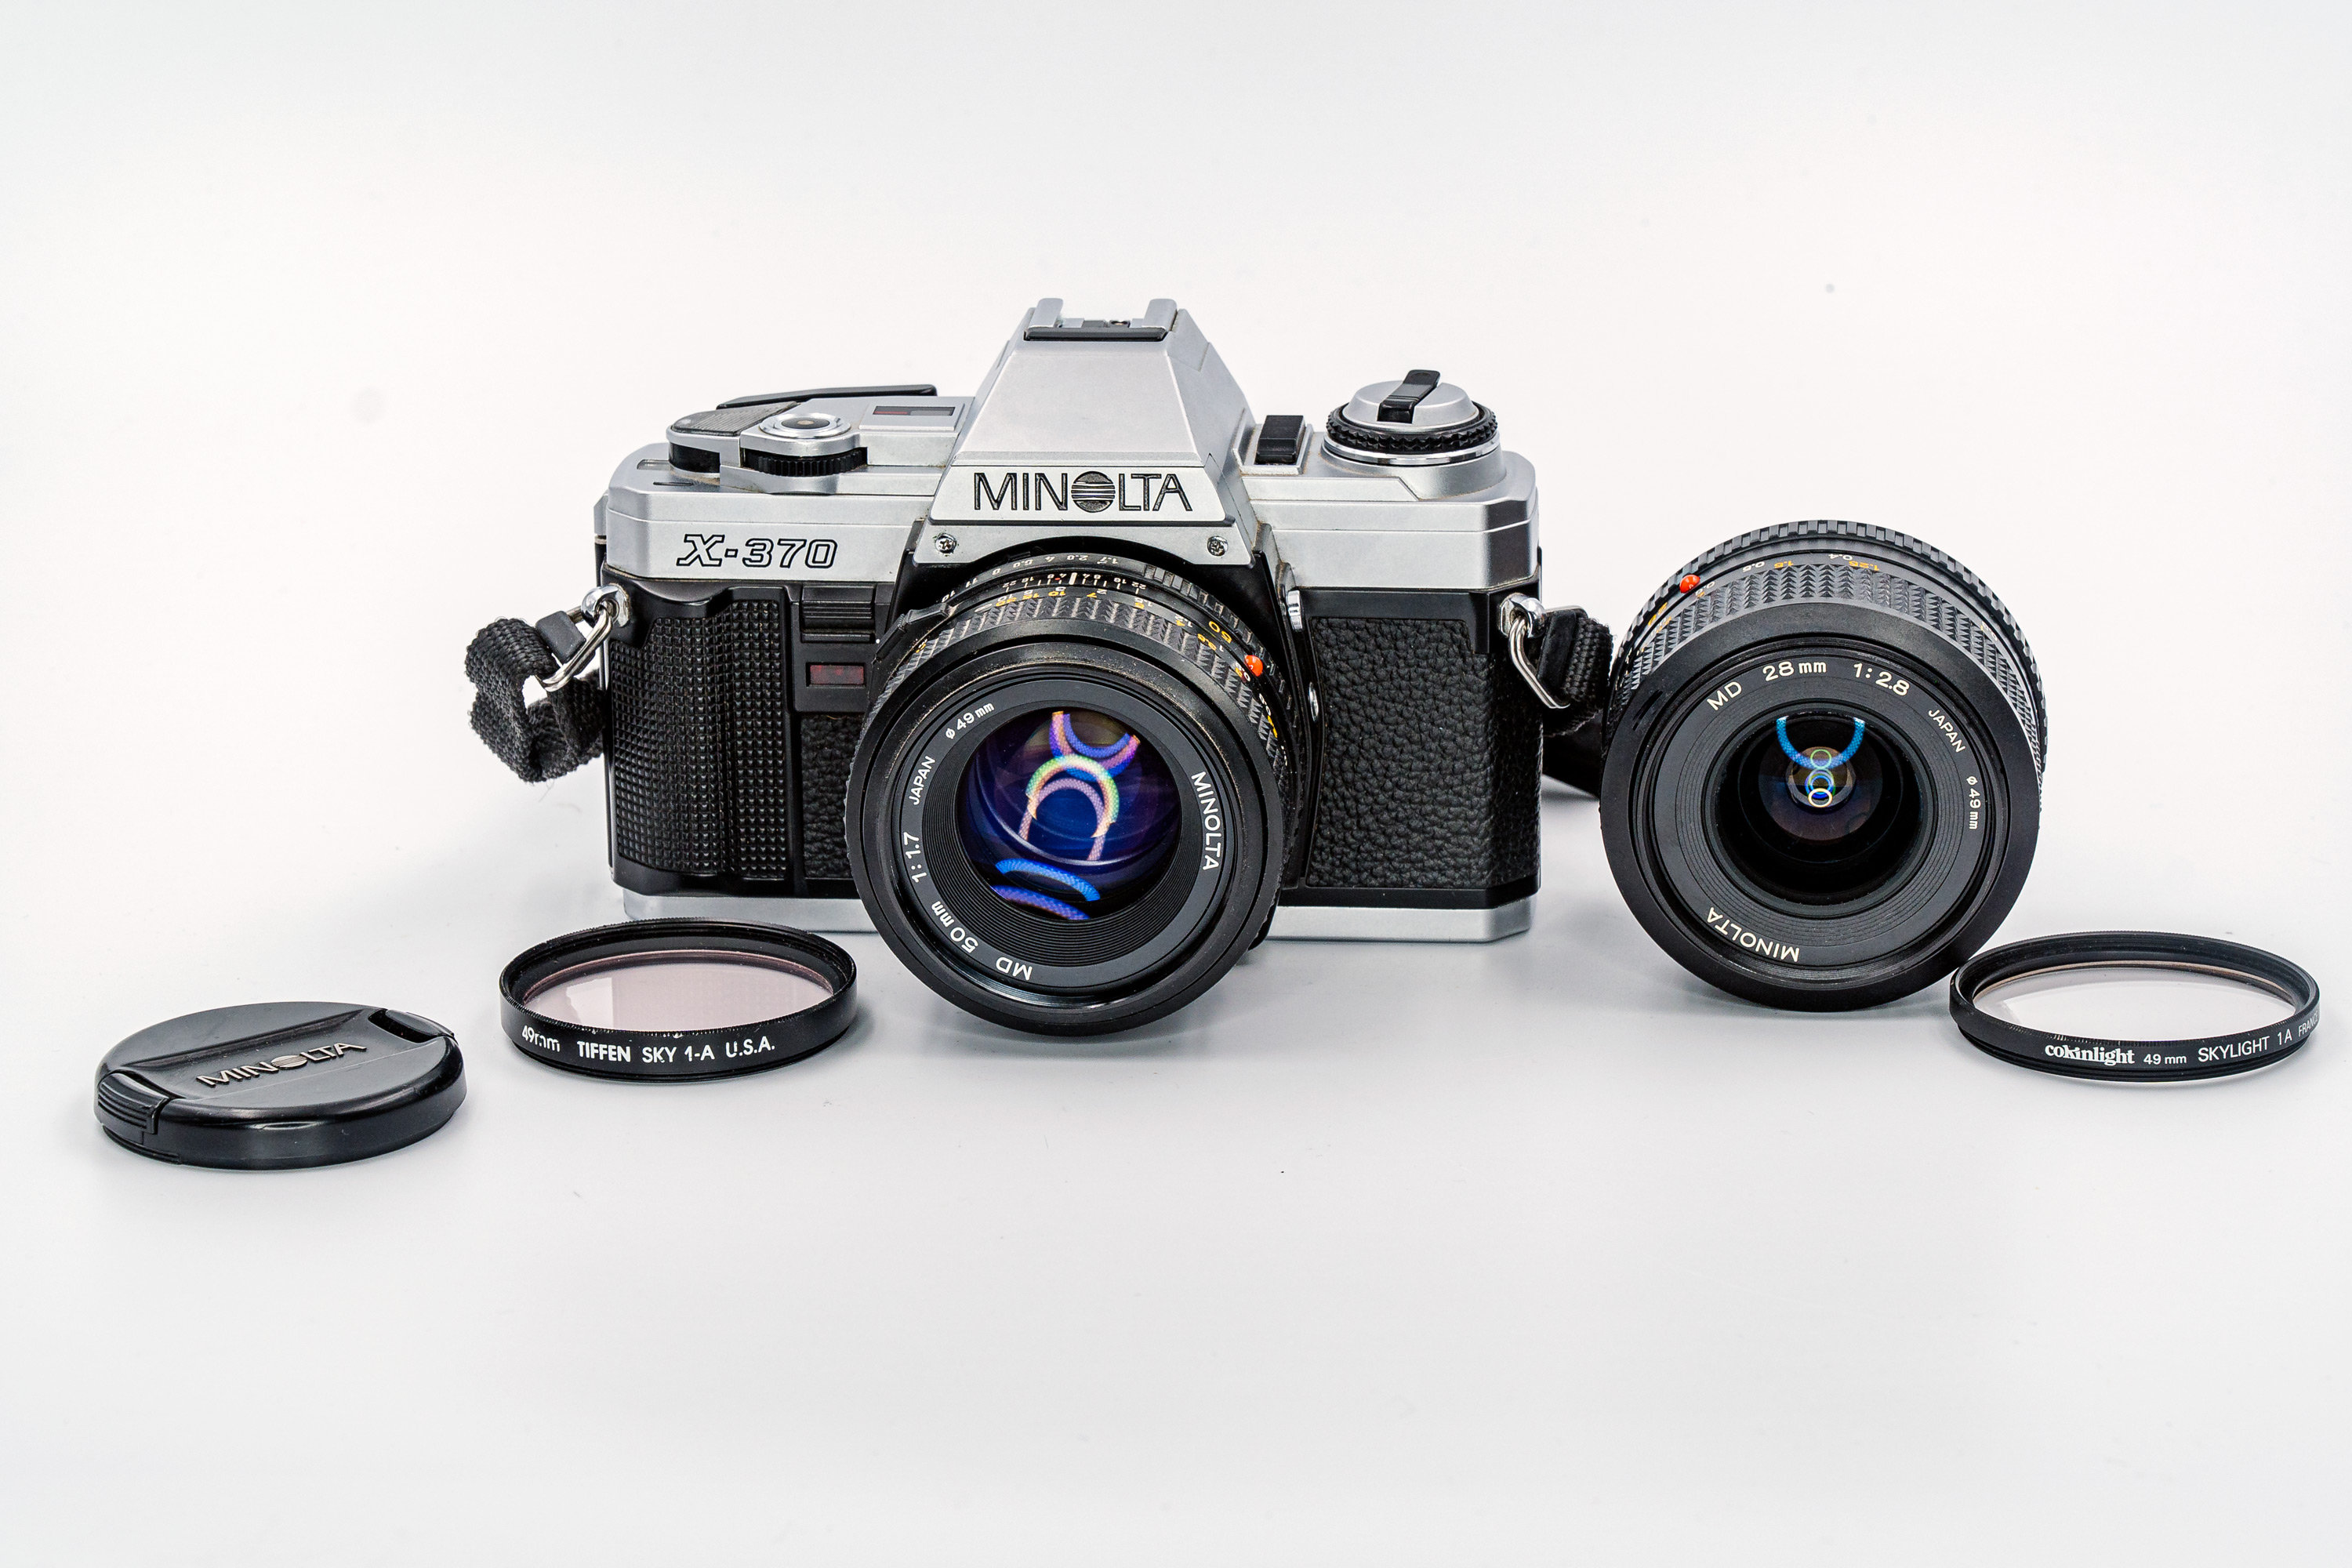 Minolta x-370 SLR Film Camera with Minolta MD 50mm F1.7 Prime and Minolta  MD 28mm F2.8 Wide angle Lenses. Excellent Condition!